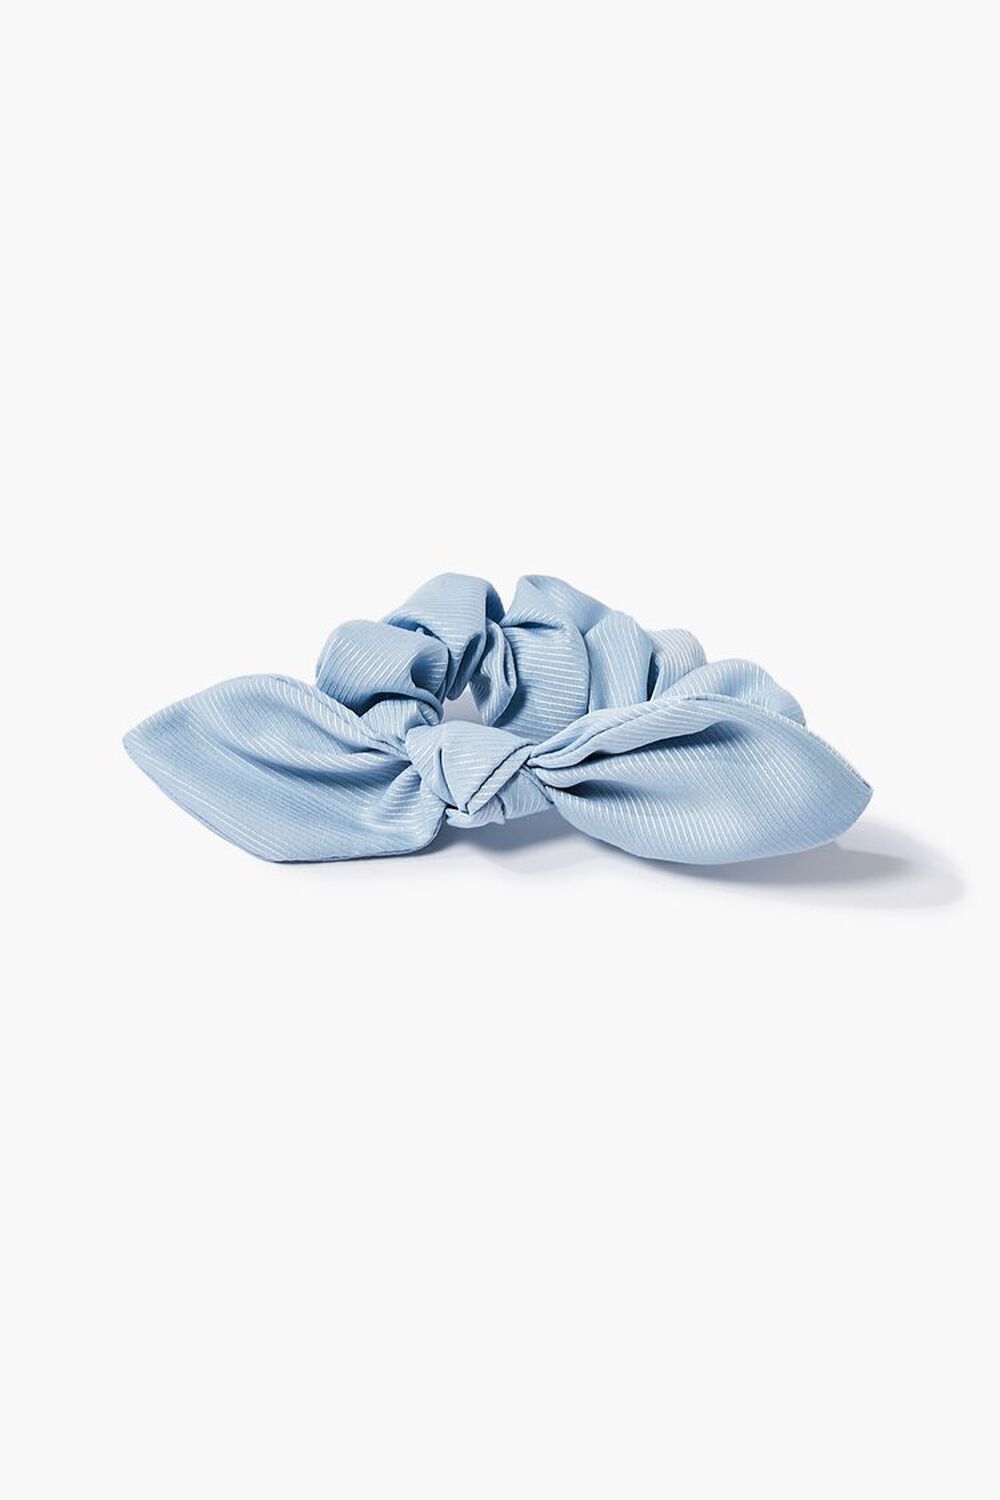 BLUE Bow Hair Scrunchie, image 1